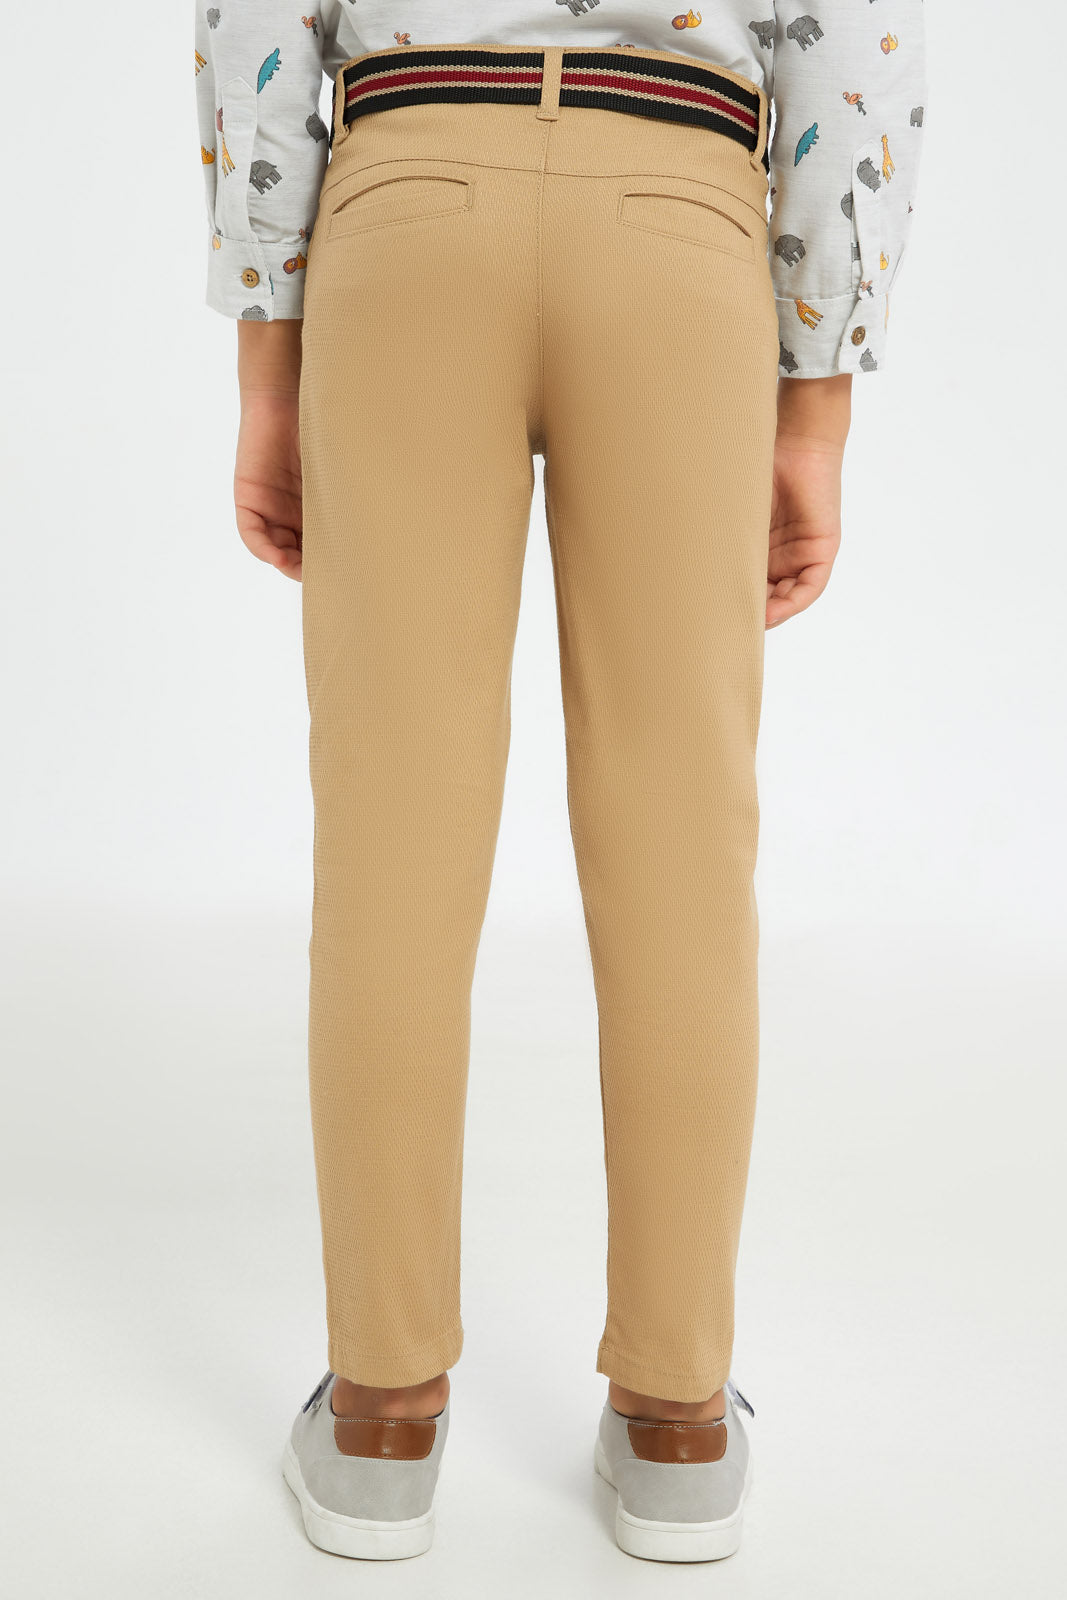 Trutex Boy's Sturdy Fit Trousers, Black, 13 Years (Manufacturer Size: 28) :  Amazon.co.uk: Fashion